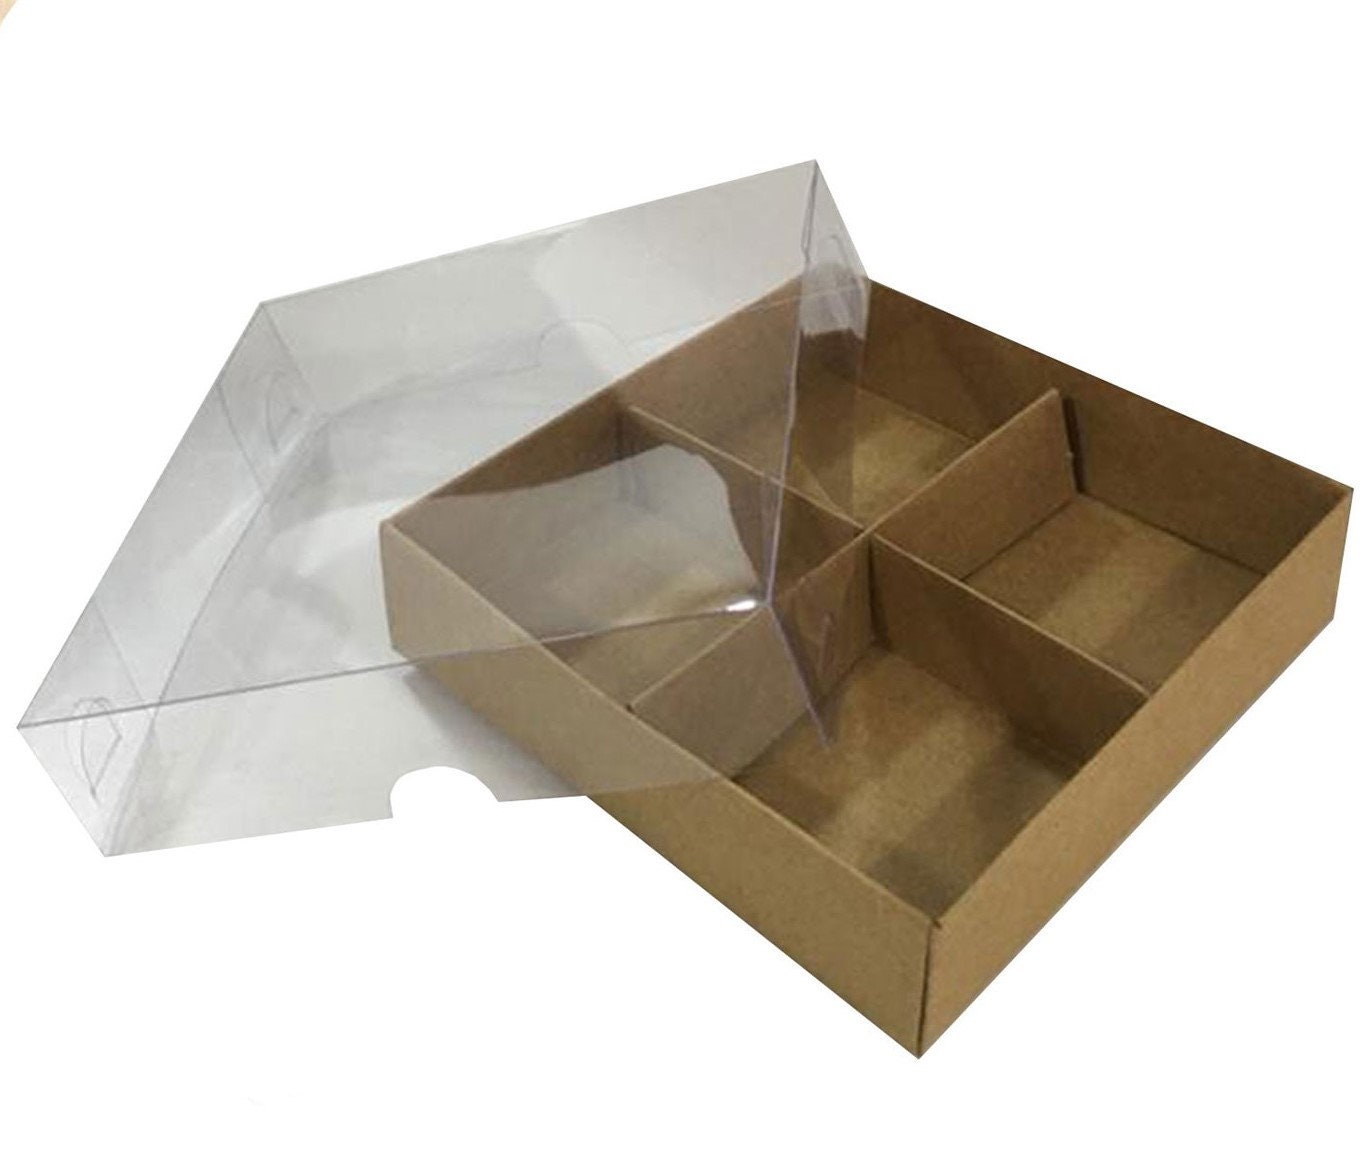 Folding disassembled box 12x12x3 cm | Etsy